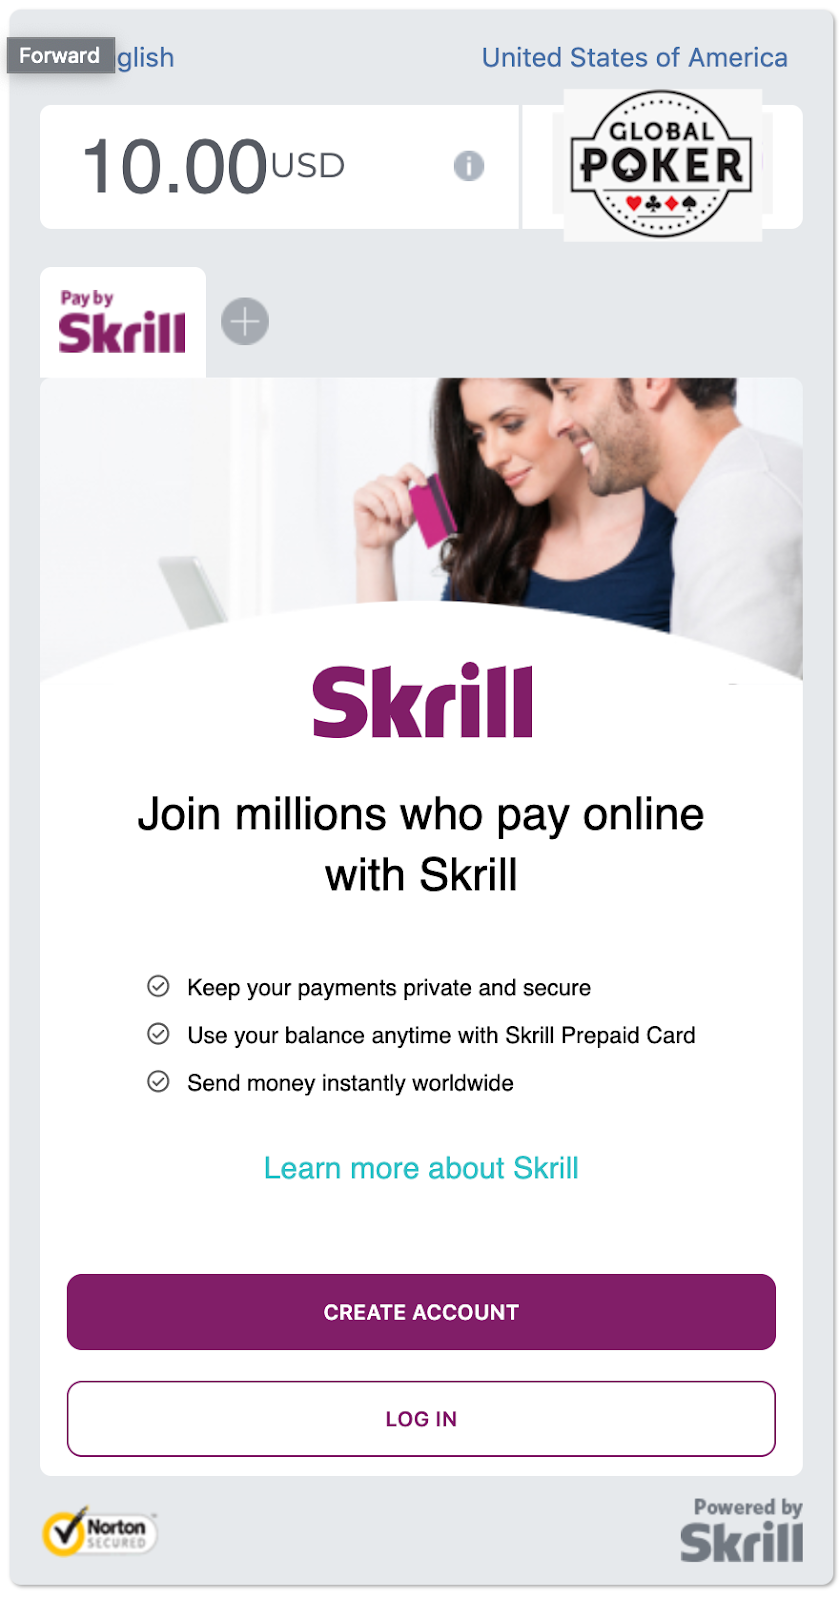 Skrill Wallet – Global Poker Help Center